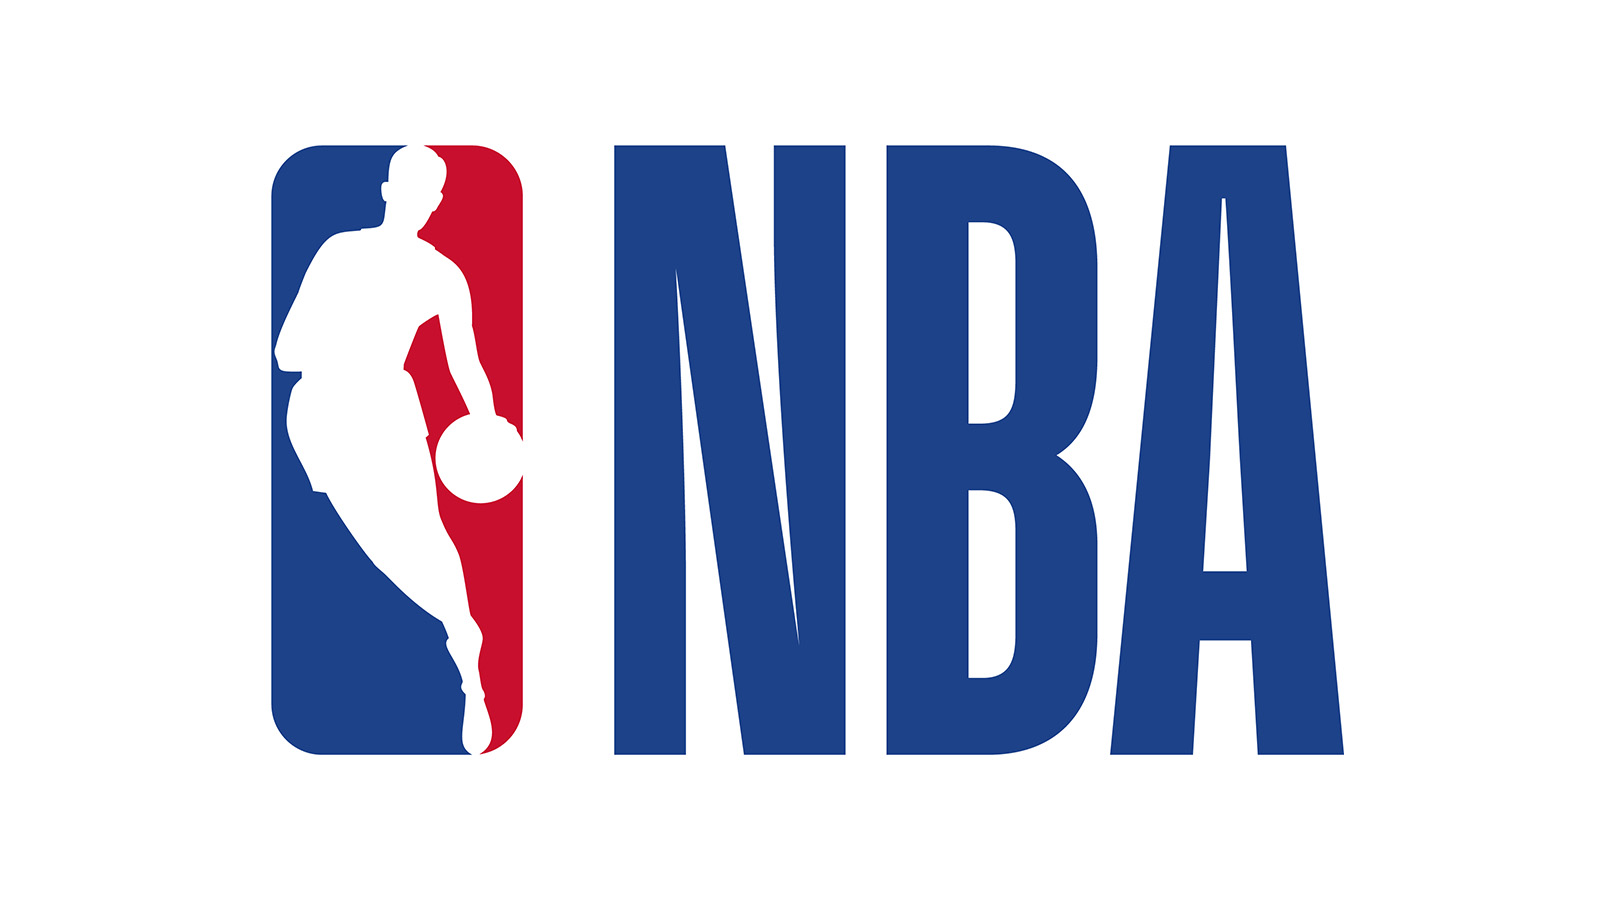 NBA Secondary logo for Header 1600x900